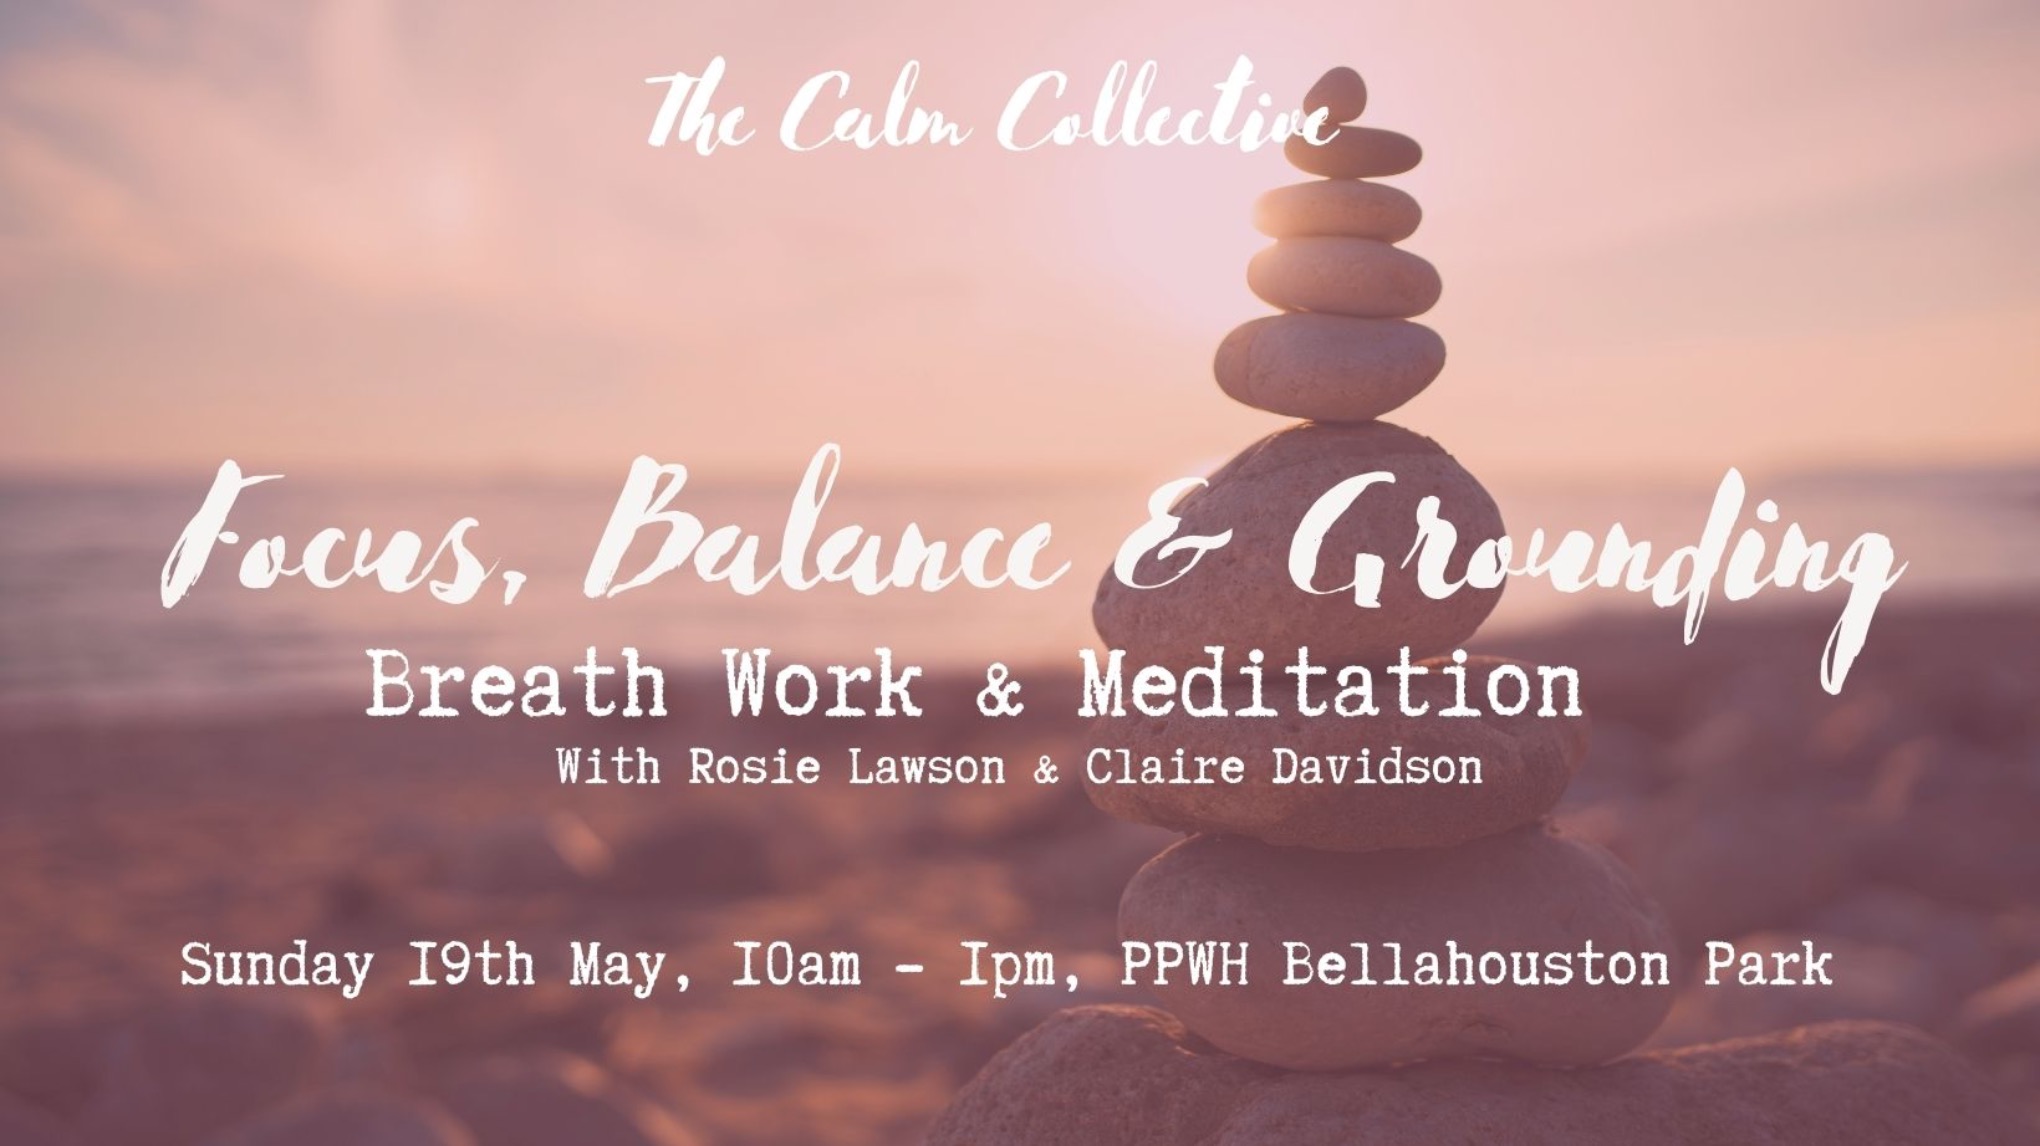 Focus, Balance & Grounding: Breath Work & Meditation Morning Retreat